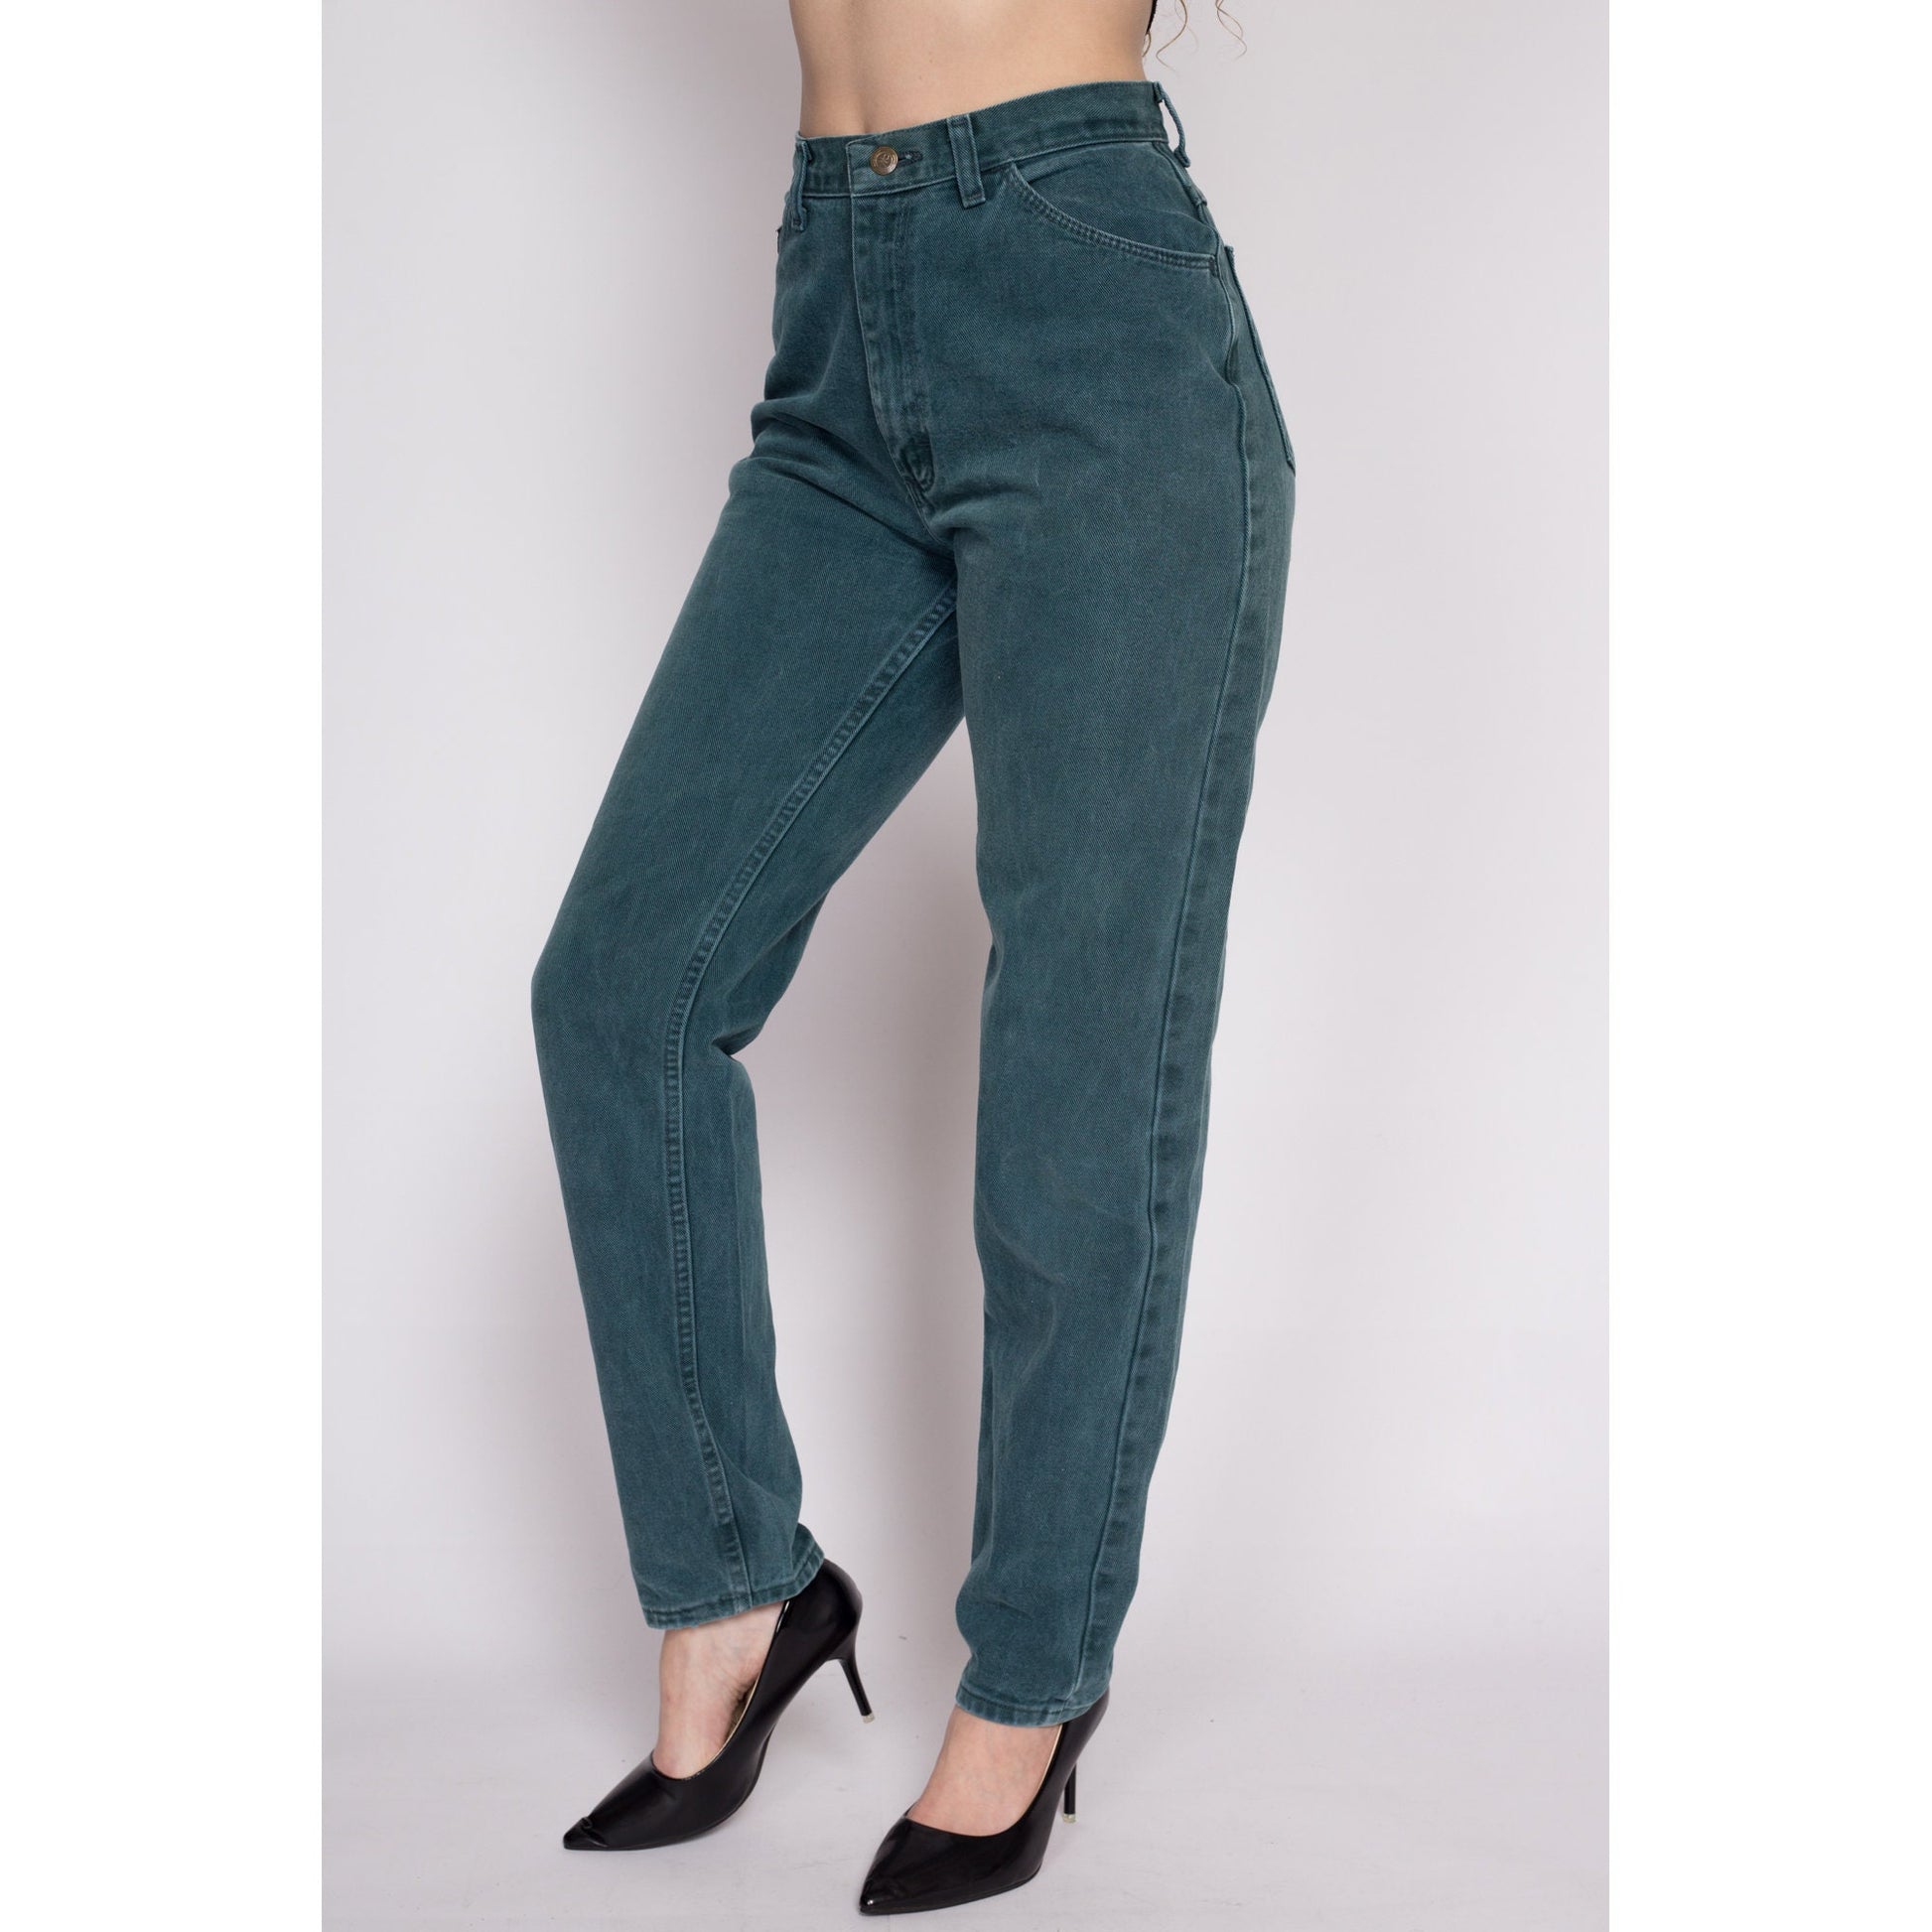 90s Wrangler High Waisted Emerald Green Jeans - Medium, 27.5